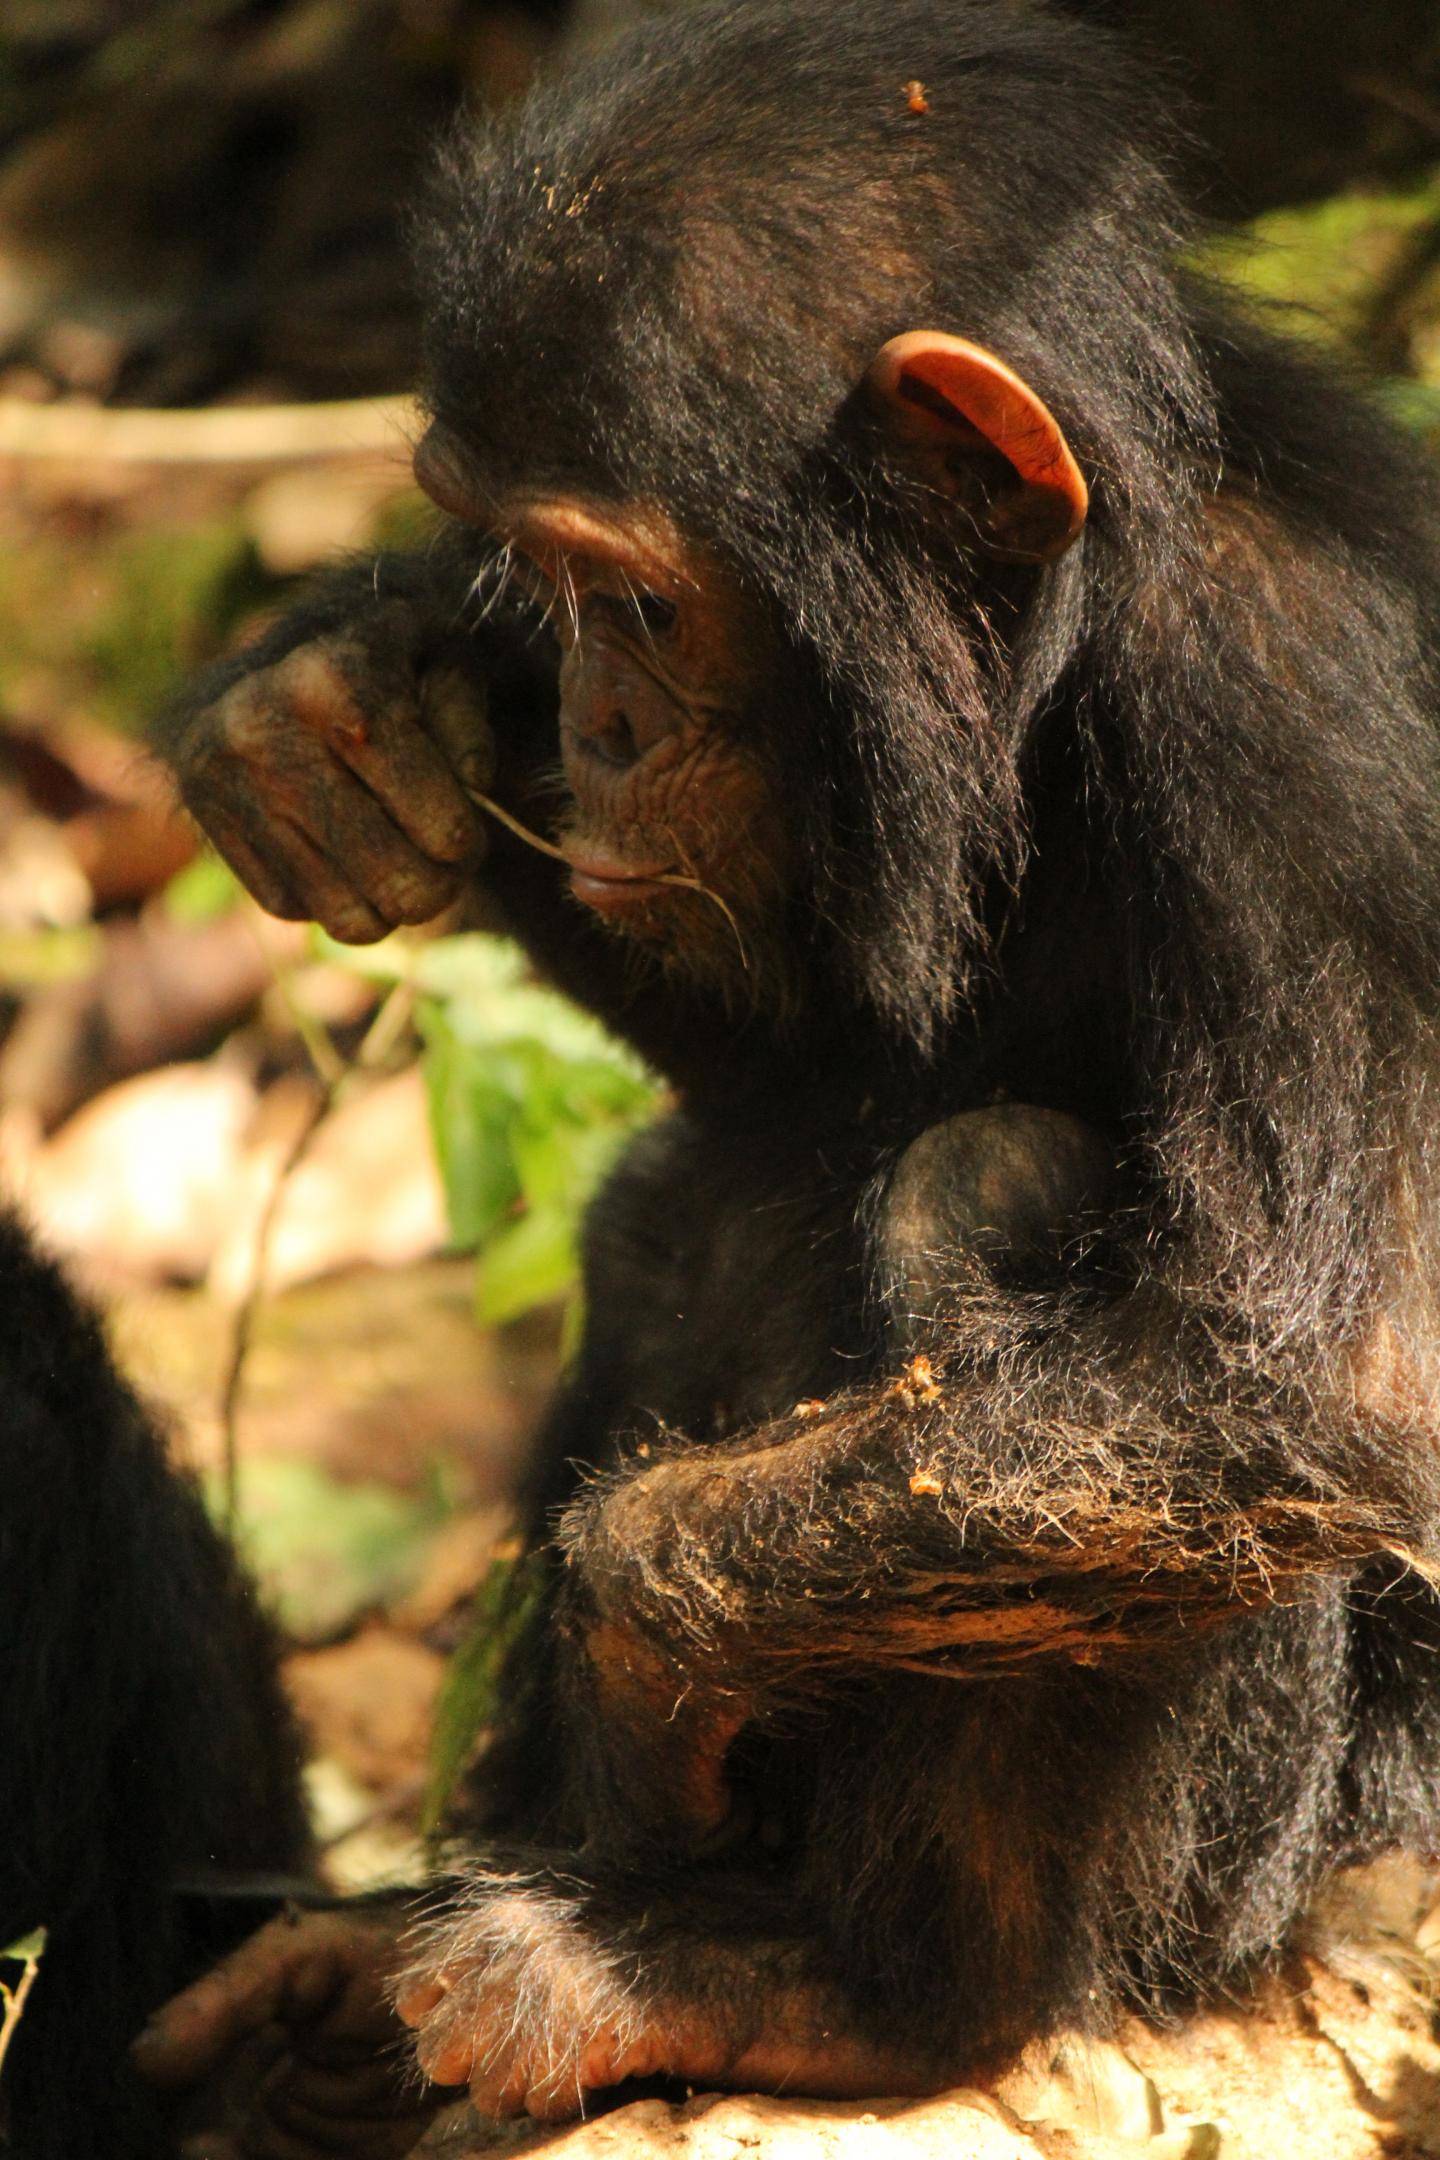 Juvenile chimpanzee Termite-Fishing